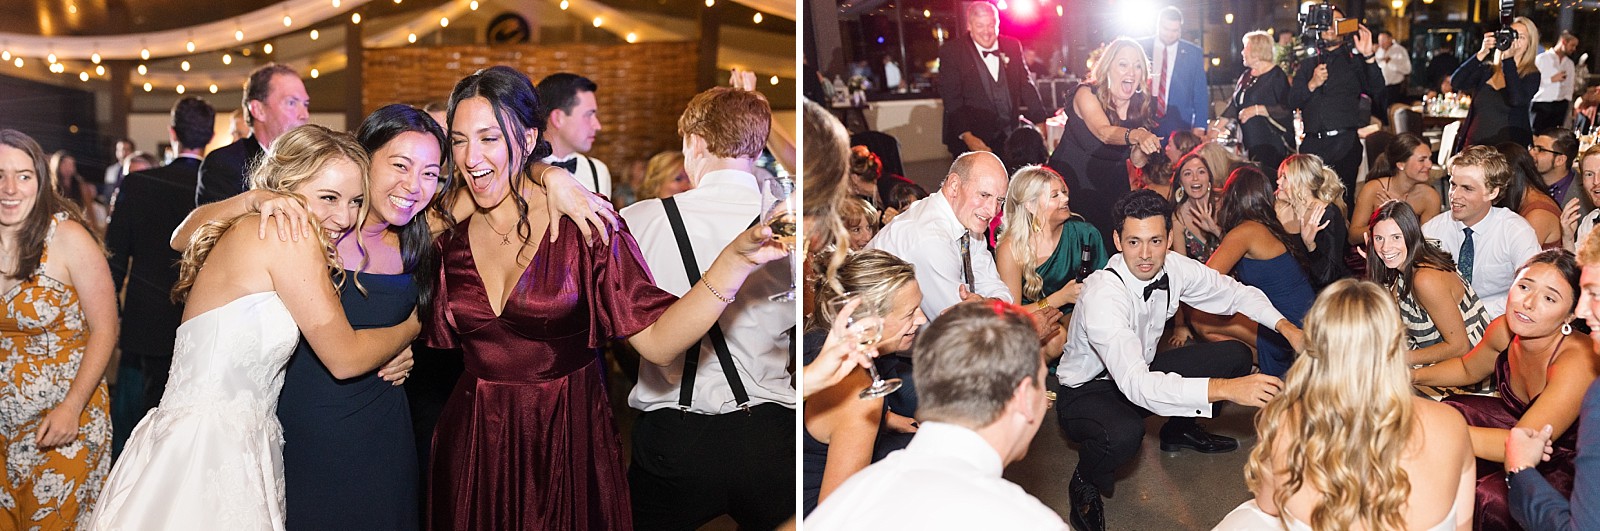 wedding guests celebrating and dancing  Childress Vineyards Wedding  | NC Wedding Photographer 